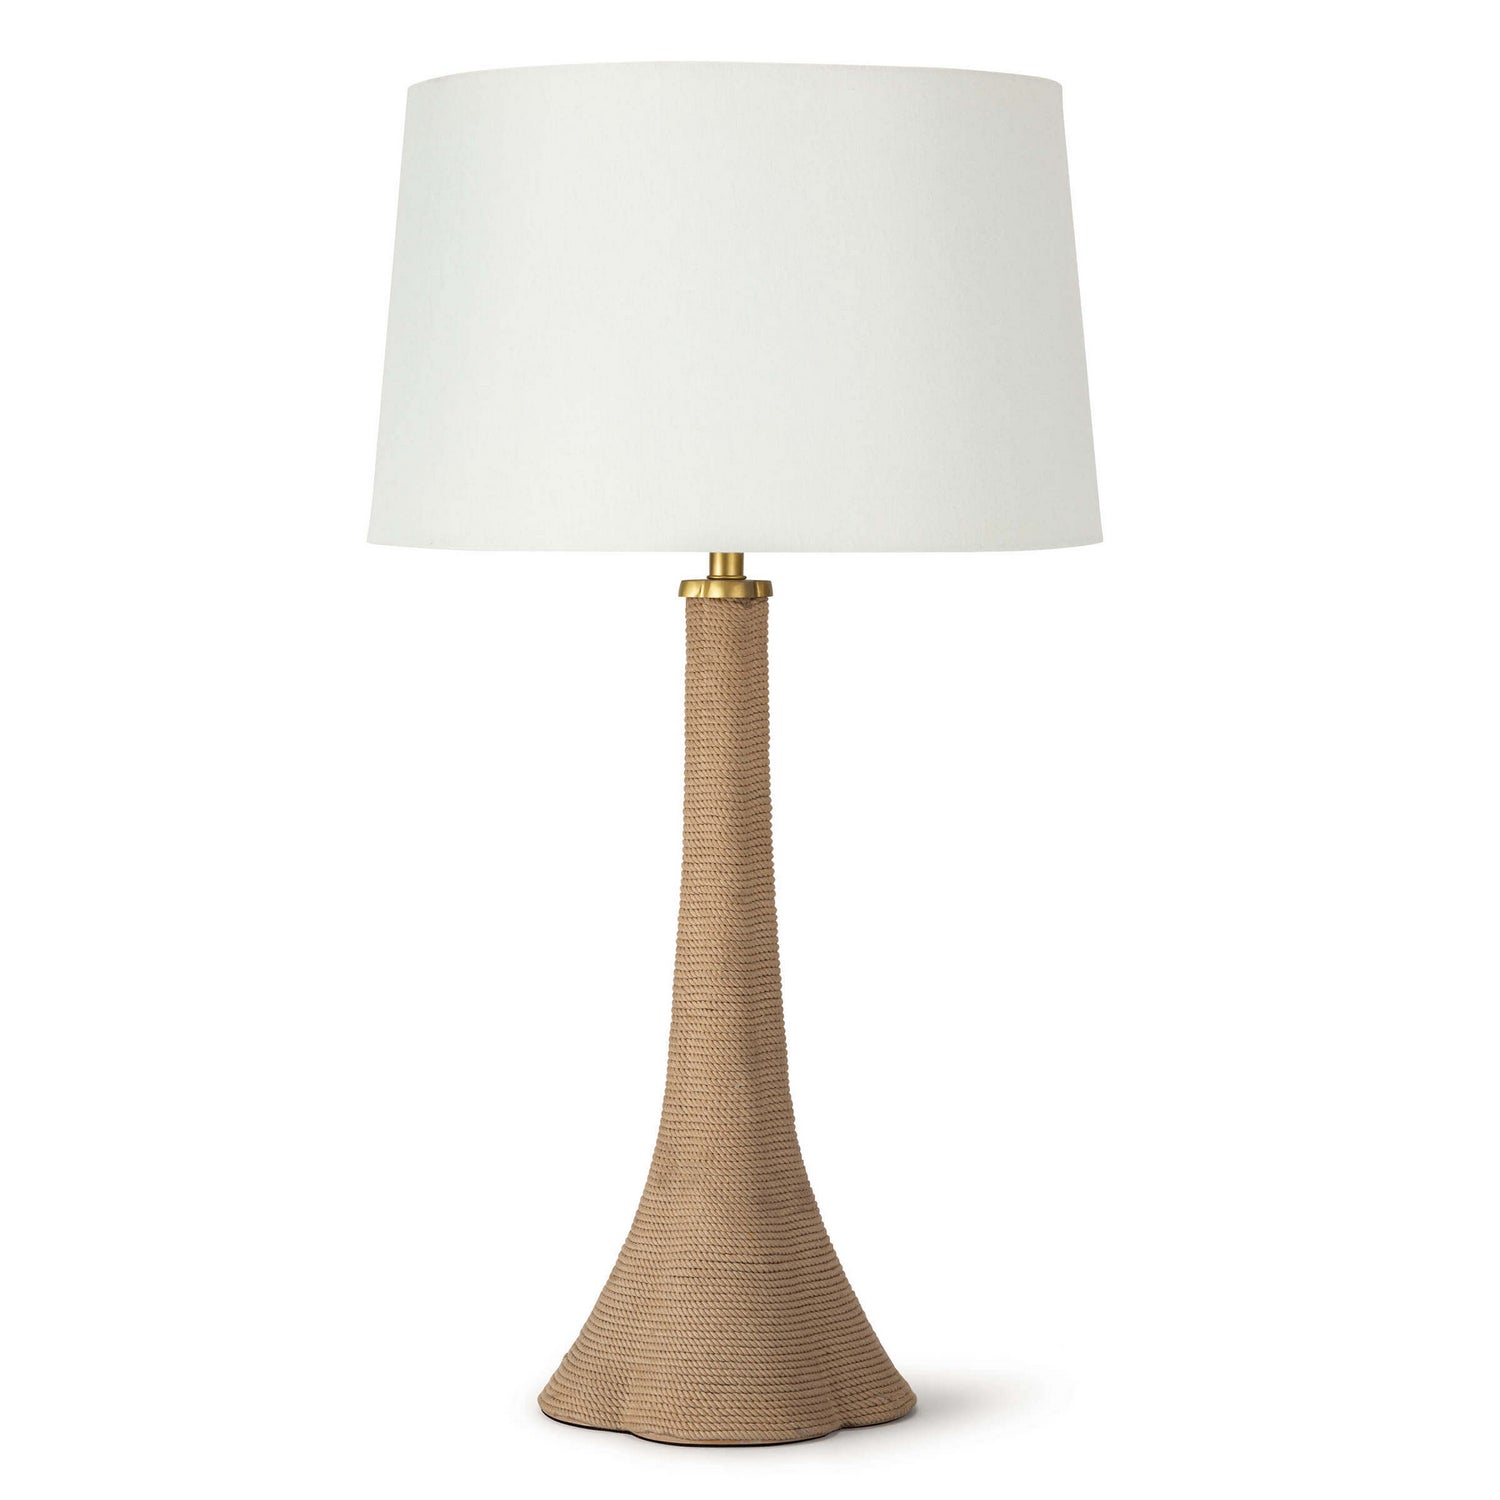 Regina Andrew - 13-1380 - One Light Table Lamp - Nona - Natural